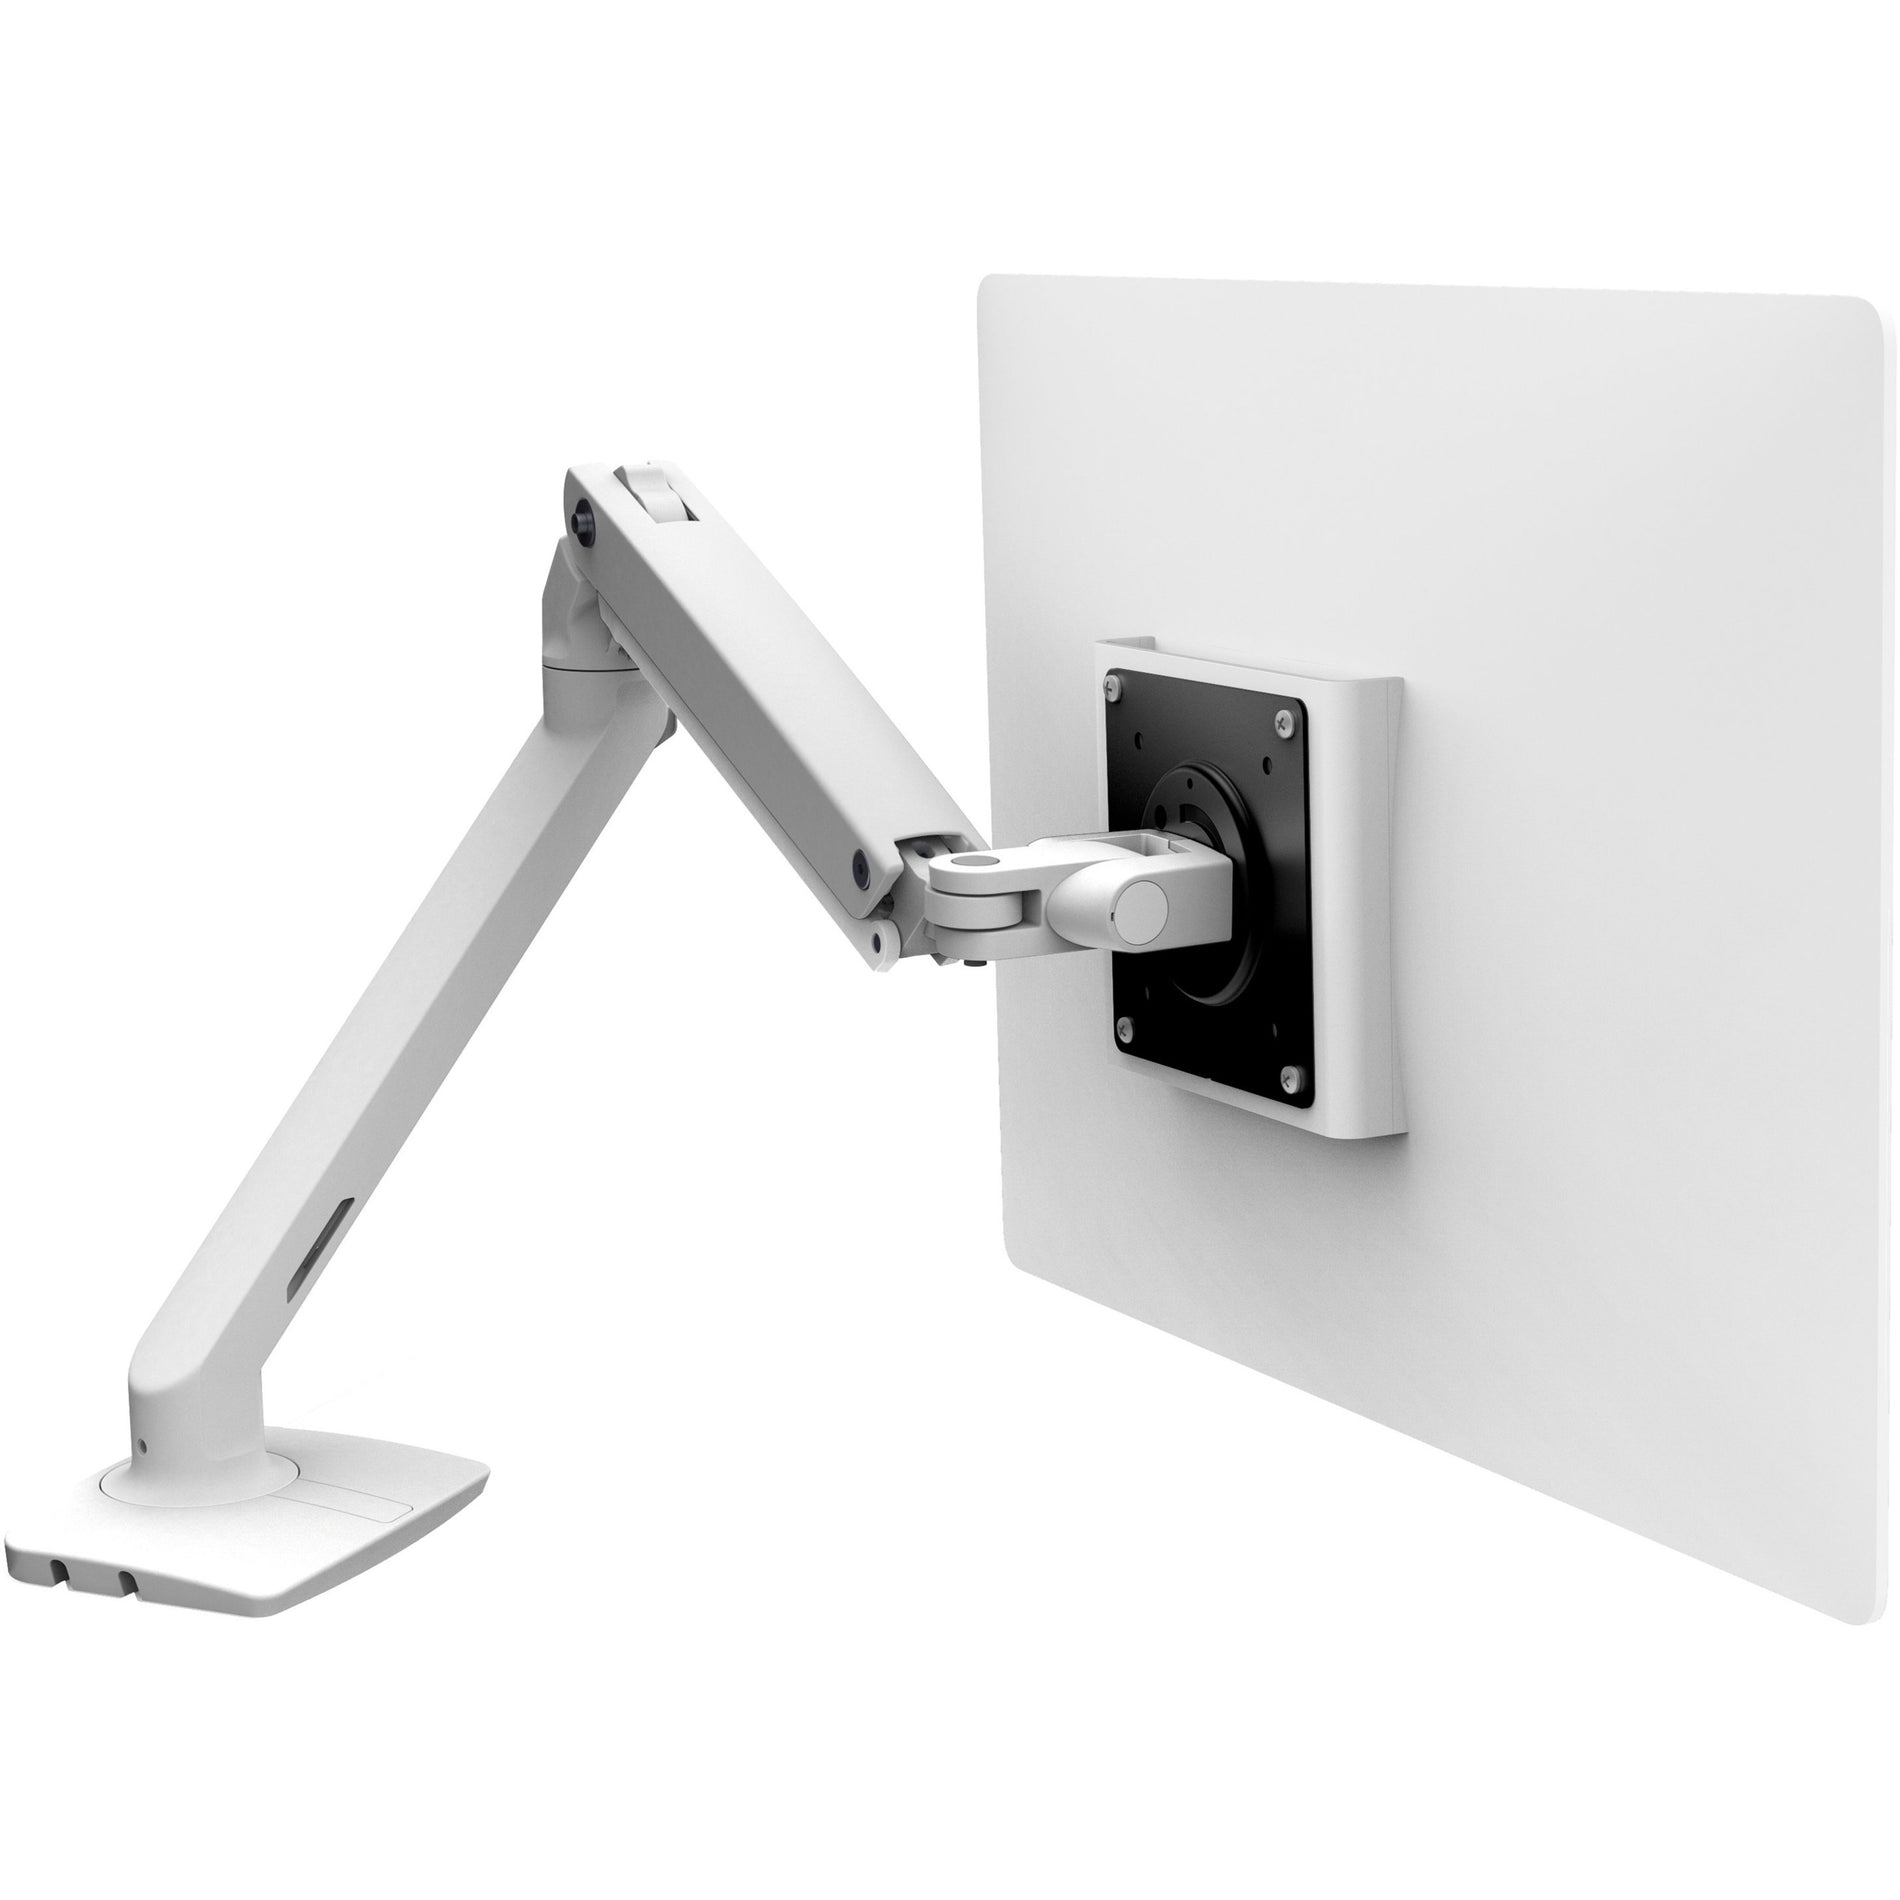 Ergotron 45-486-216 MXV Desk Monitor Arm (White) Mounting Arm for LCD Monitor, 20 lb Maximum Load Capacity